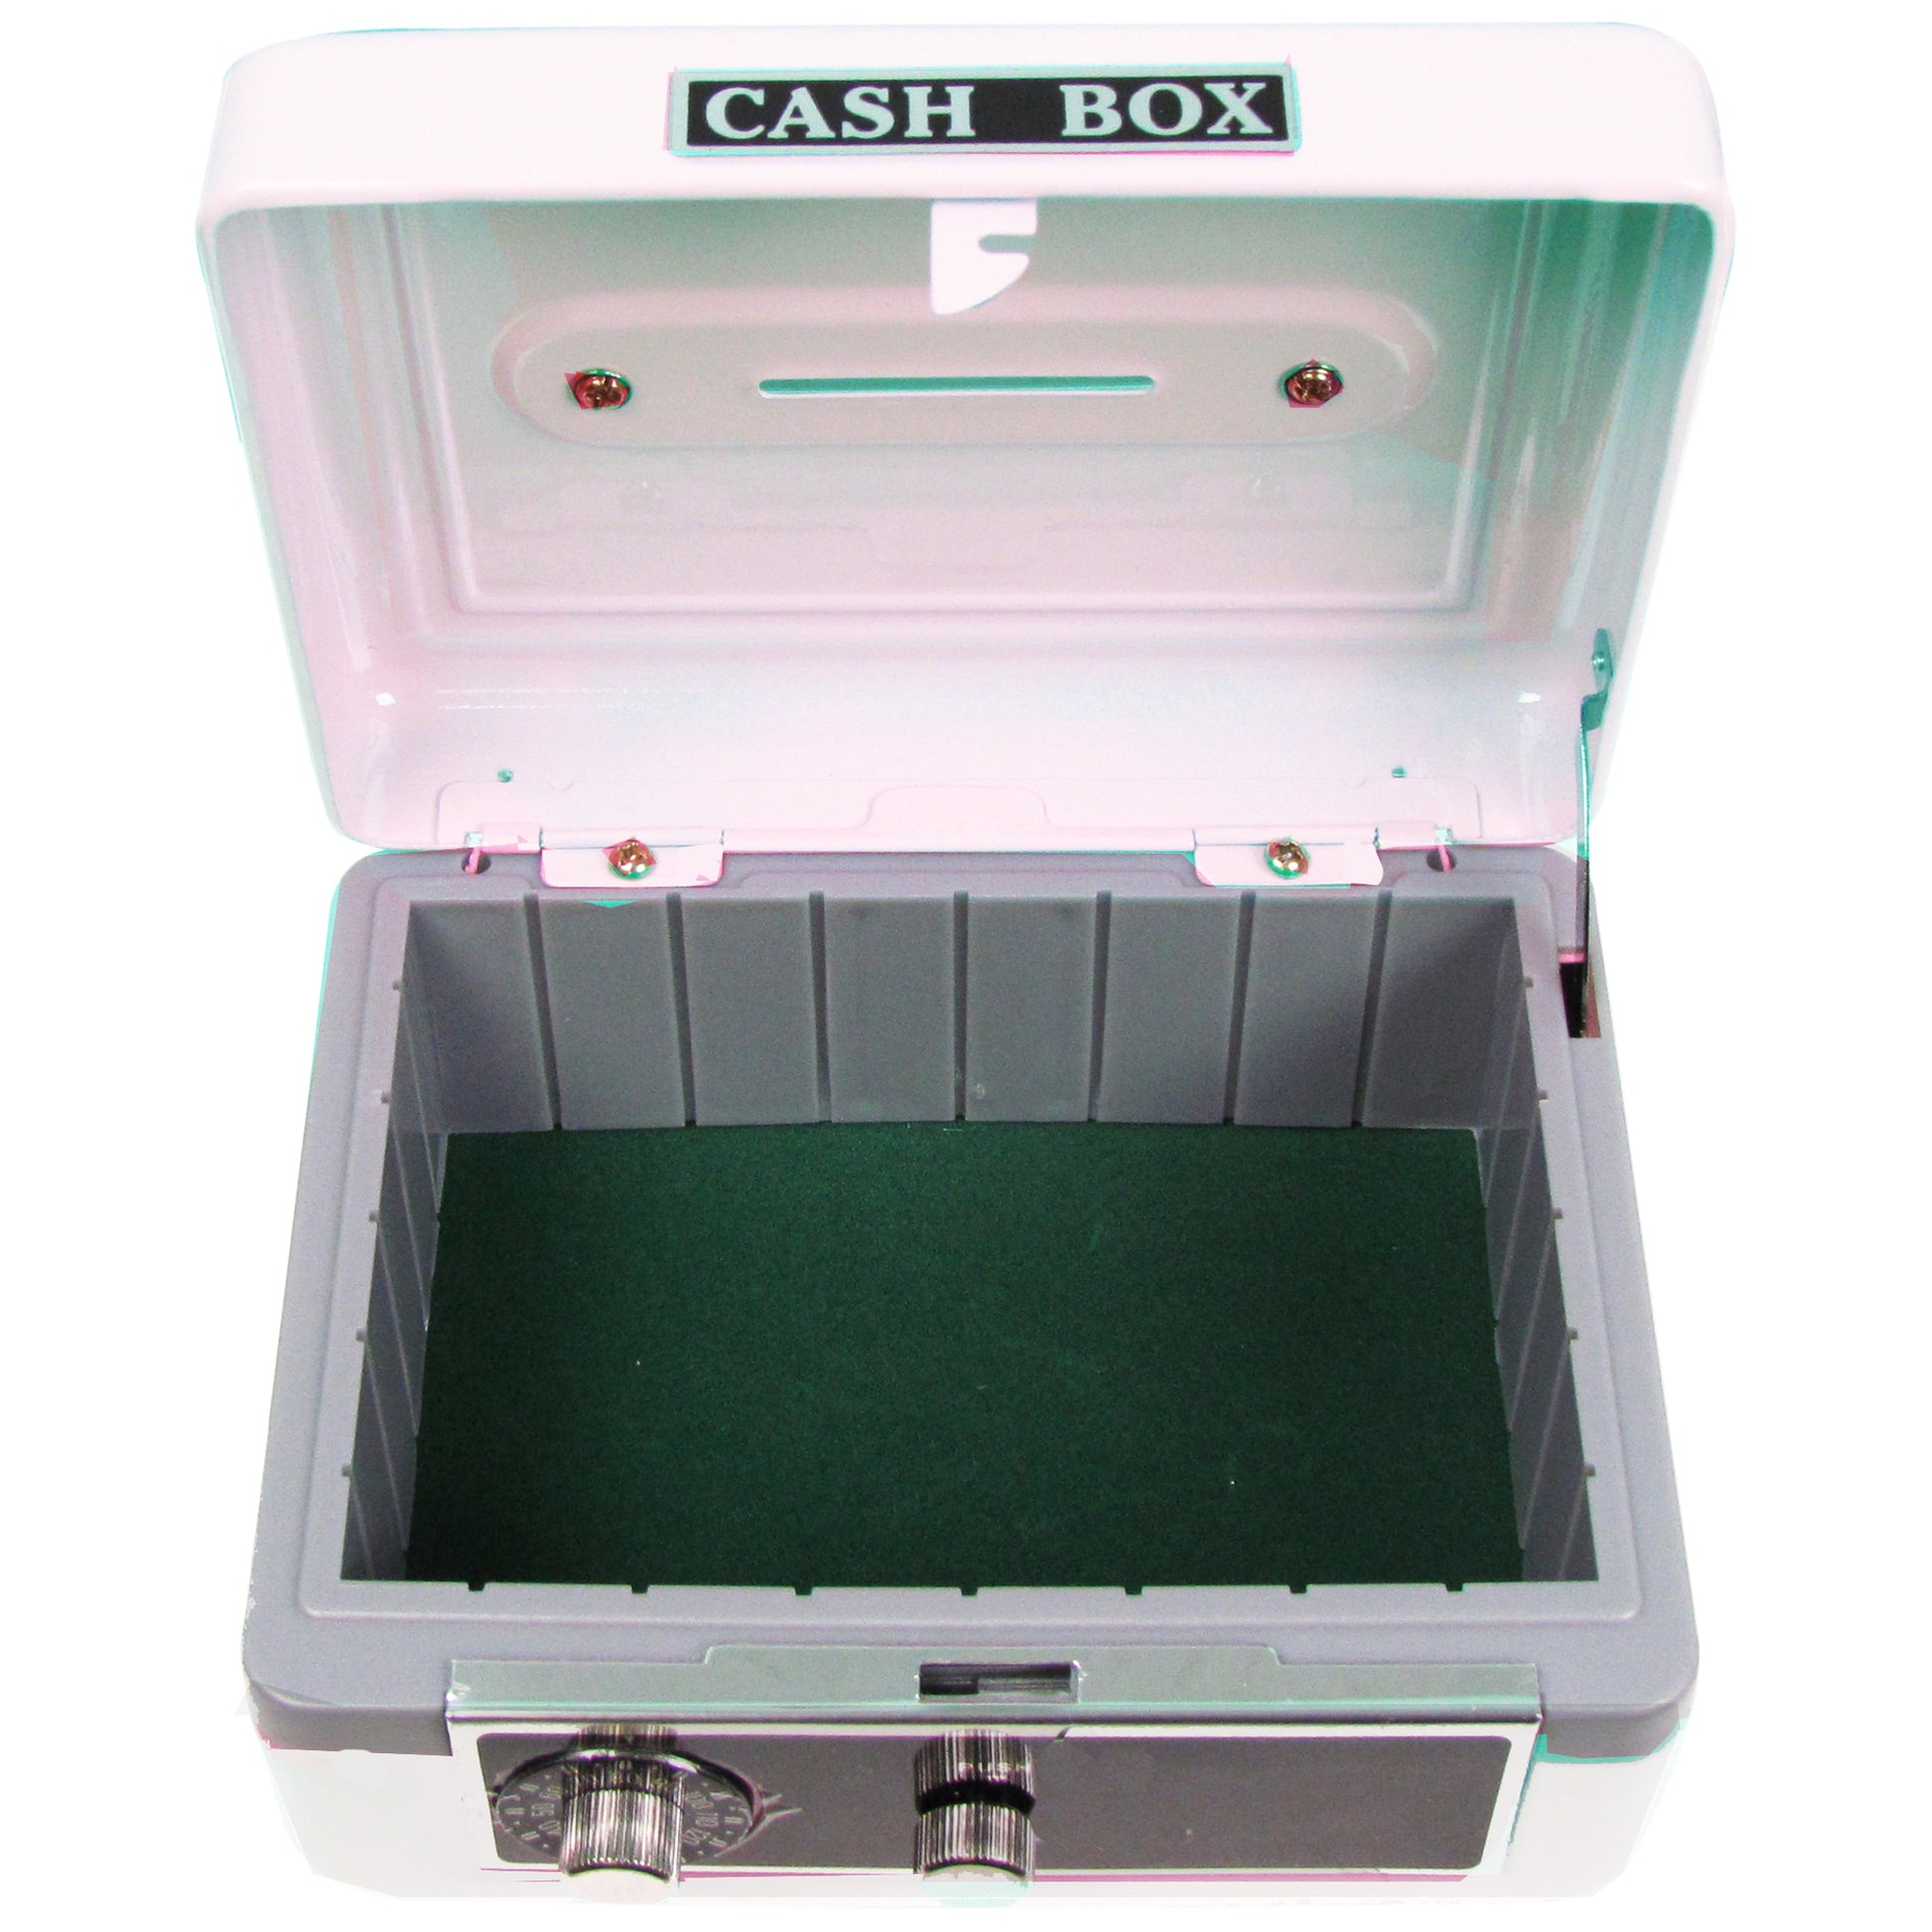 Personalized White Cash Box with Baseball design